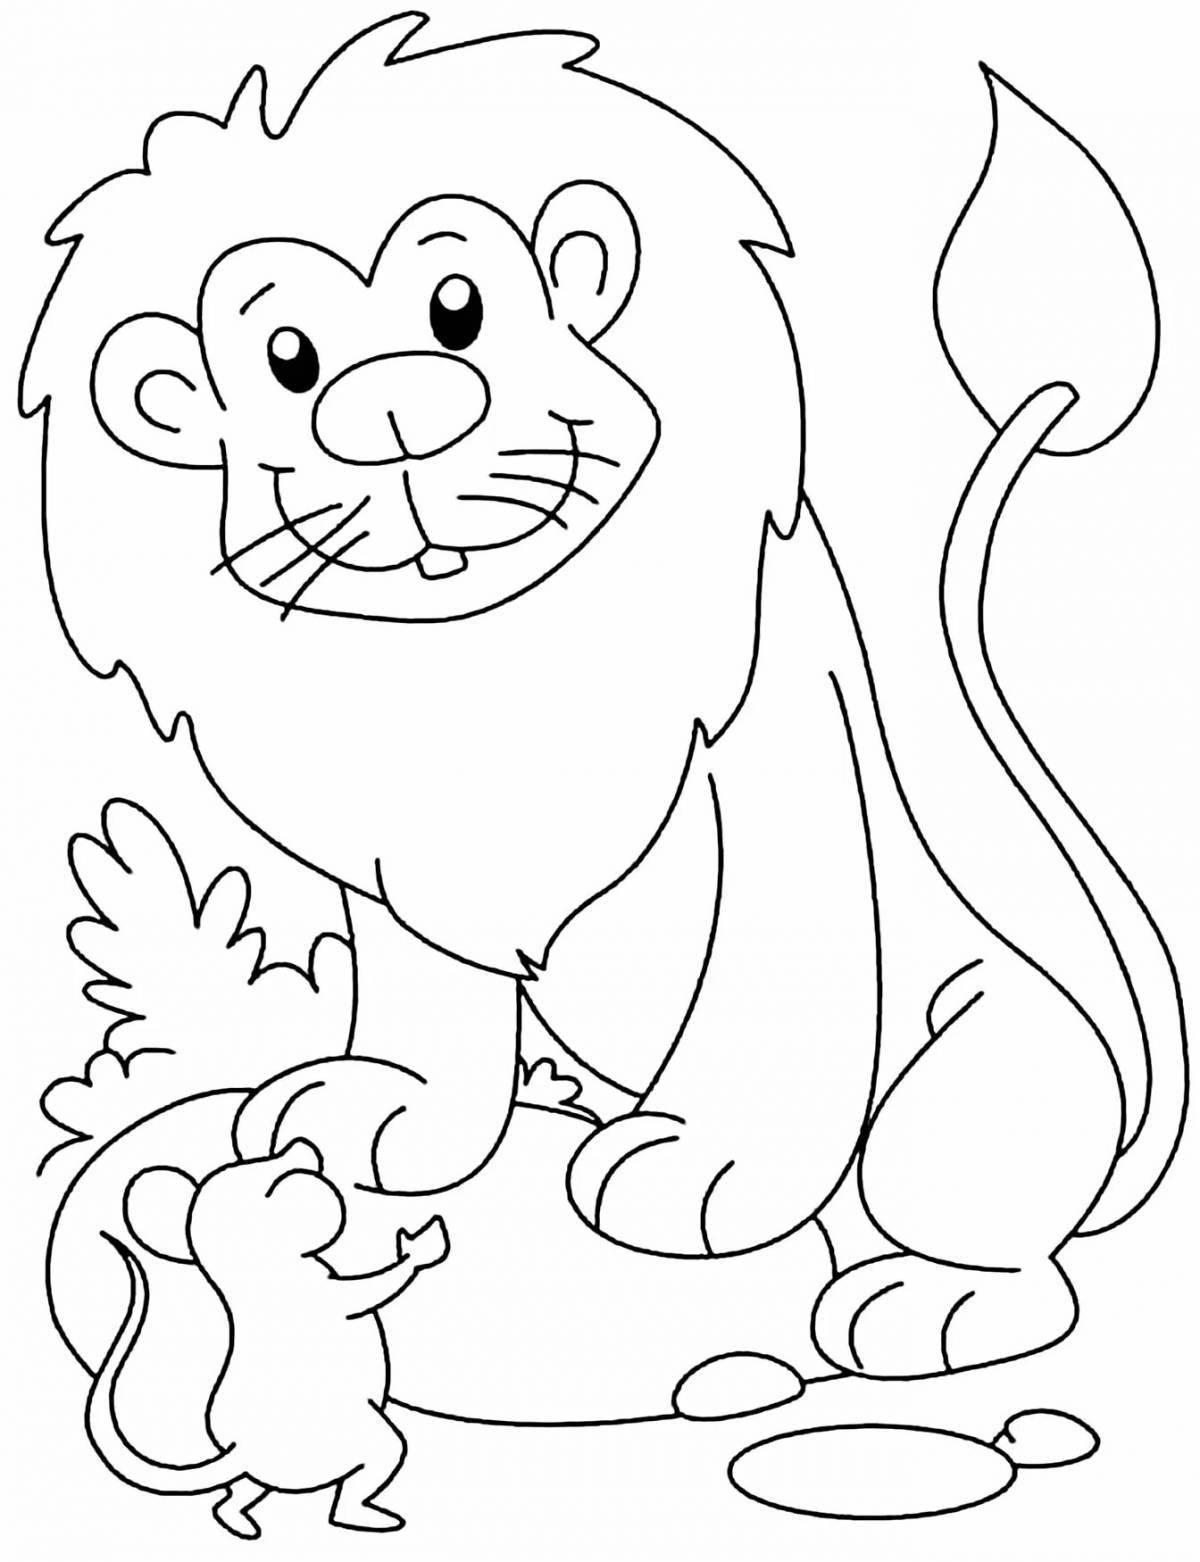 Cute fat lion coloring book